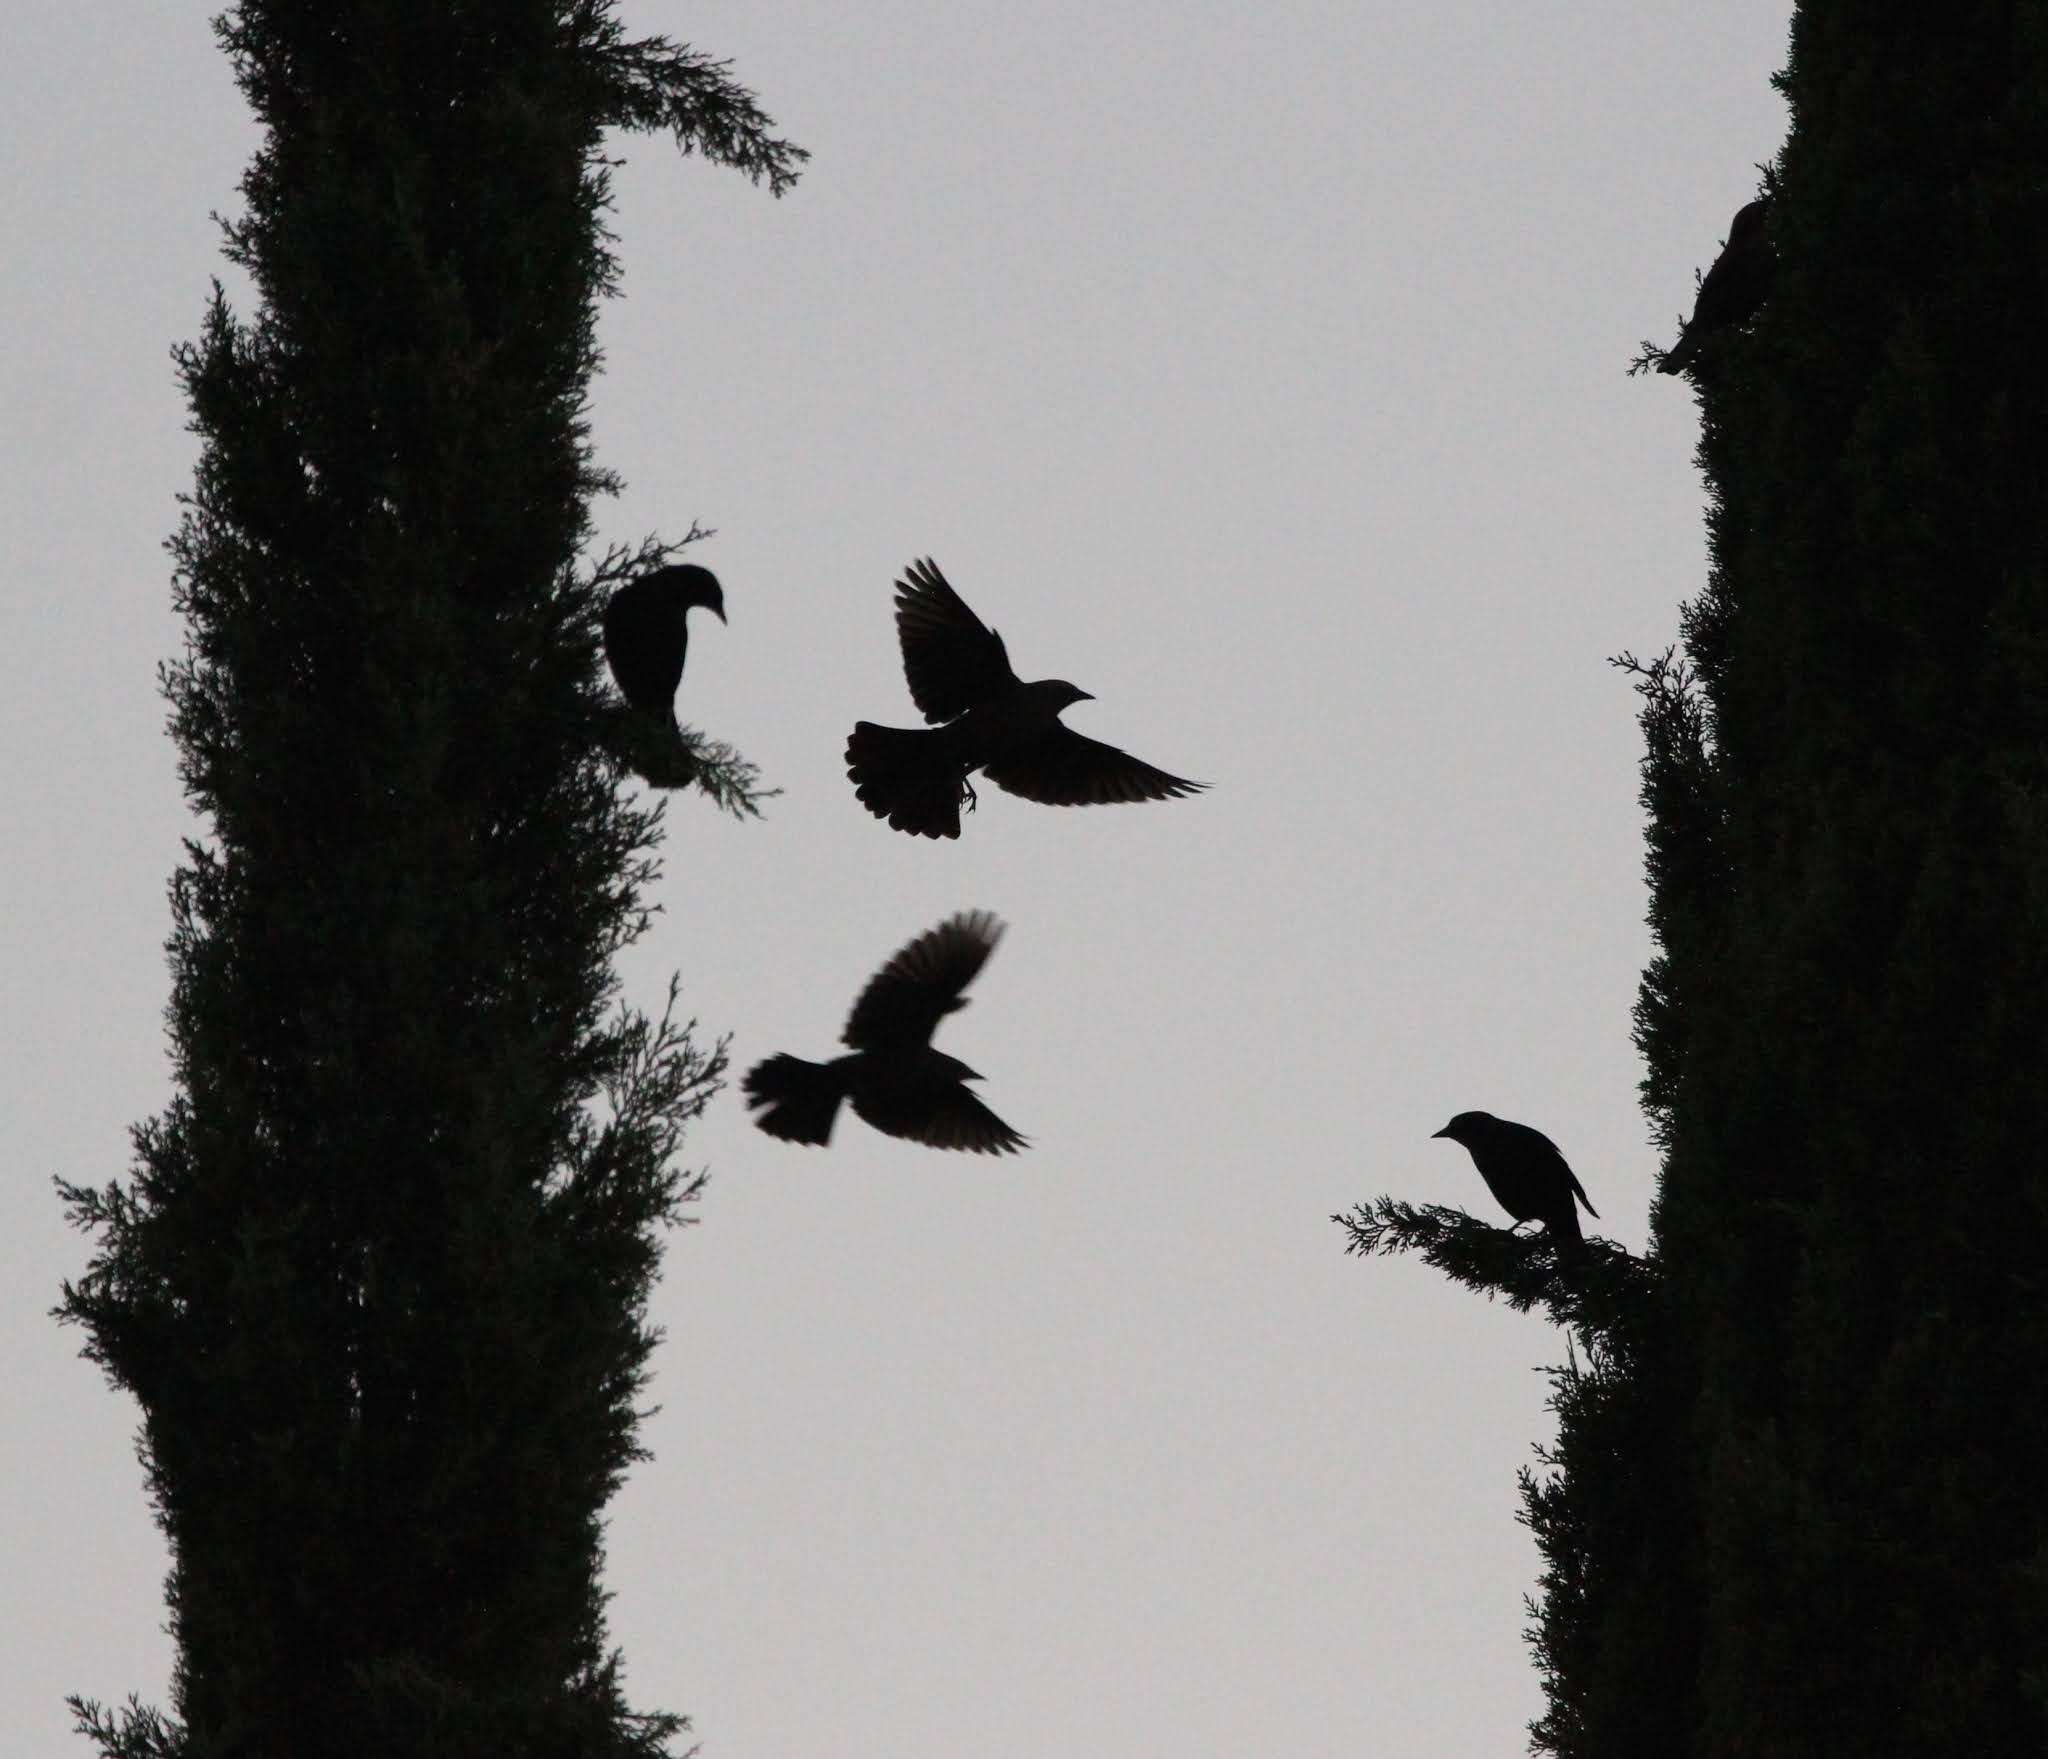 Red-winged blackbird choir sings good night